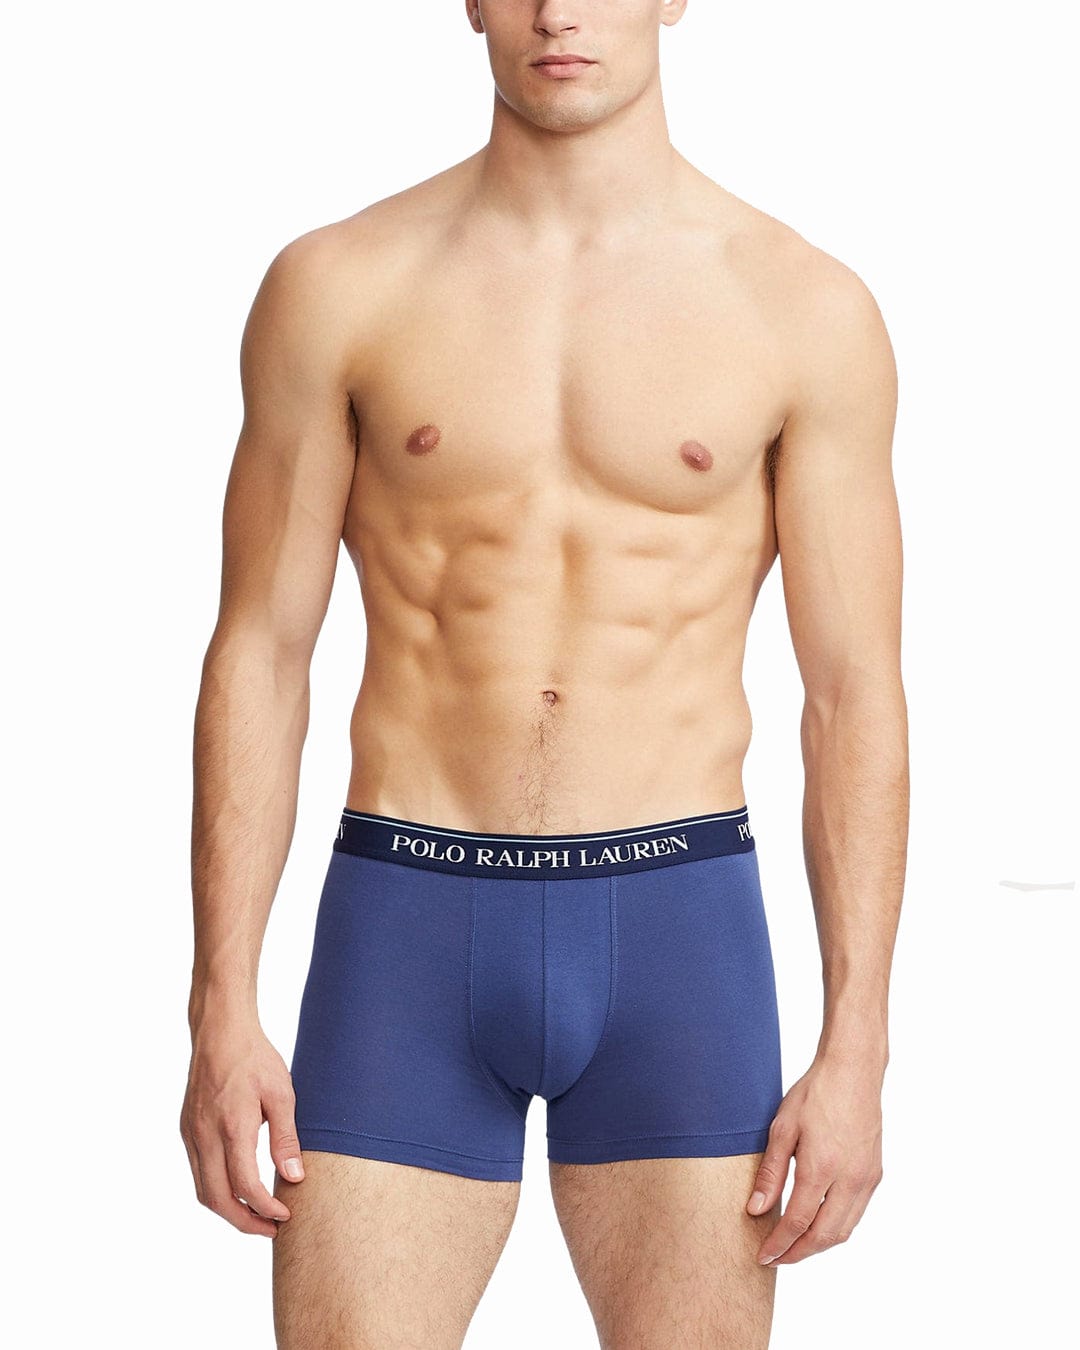 Polo Ralph Lauren Underwear Polo Ralph Lauren Sky Blue, Orange And Navy Three-Pack Trunks